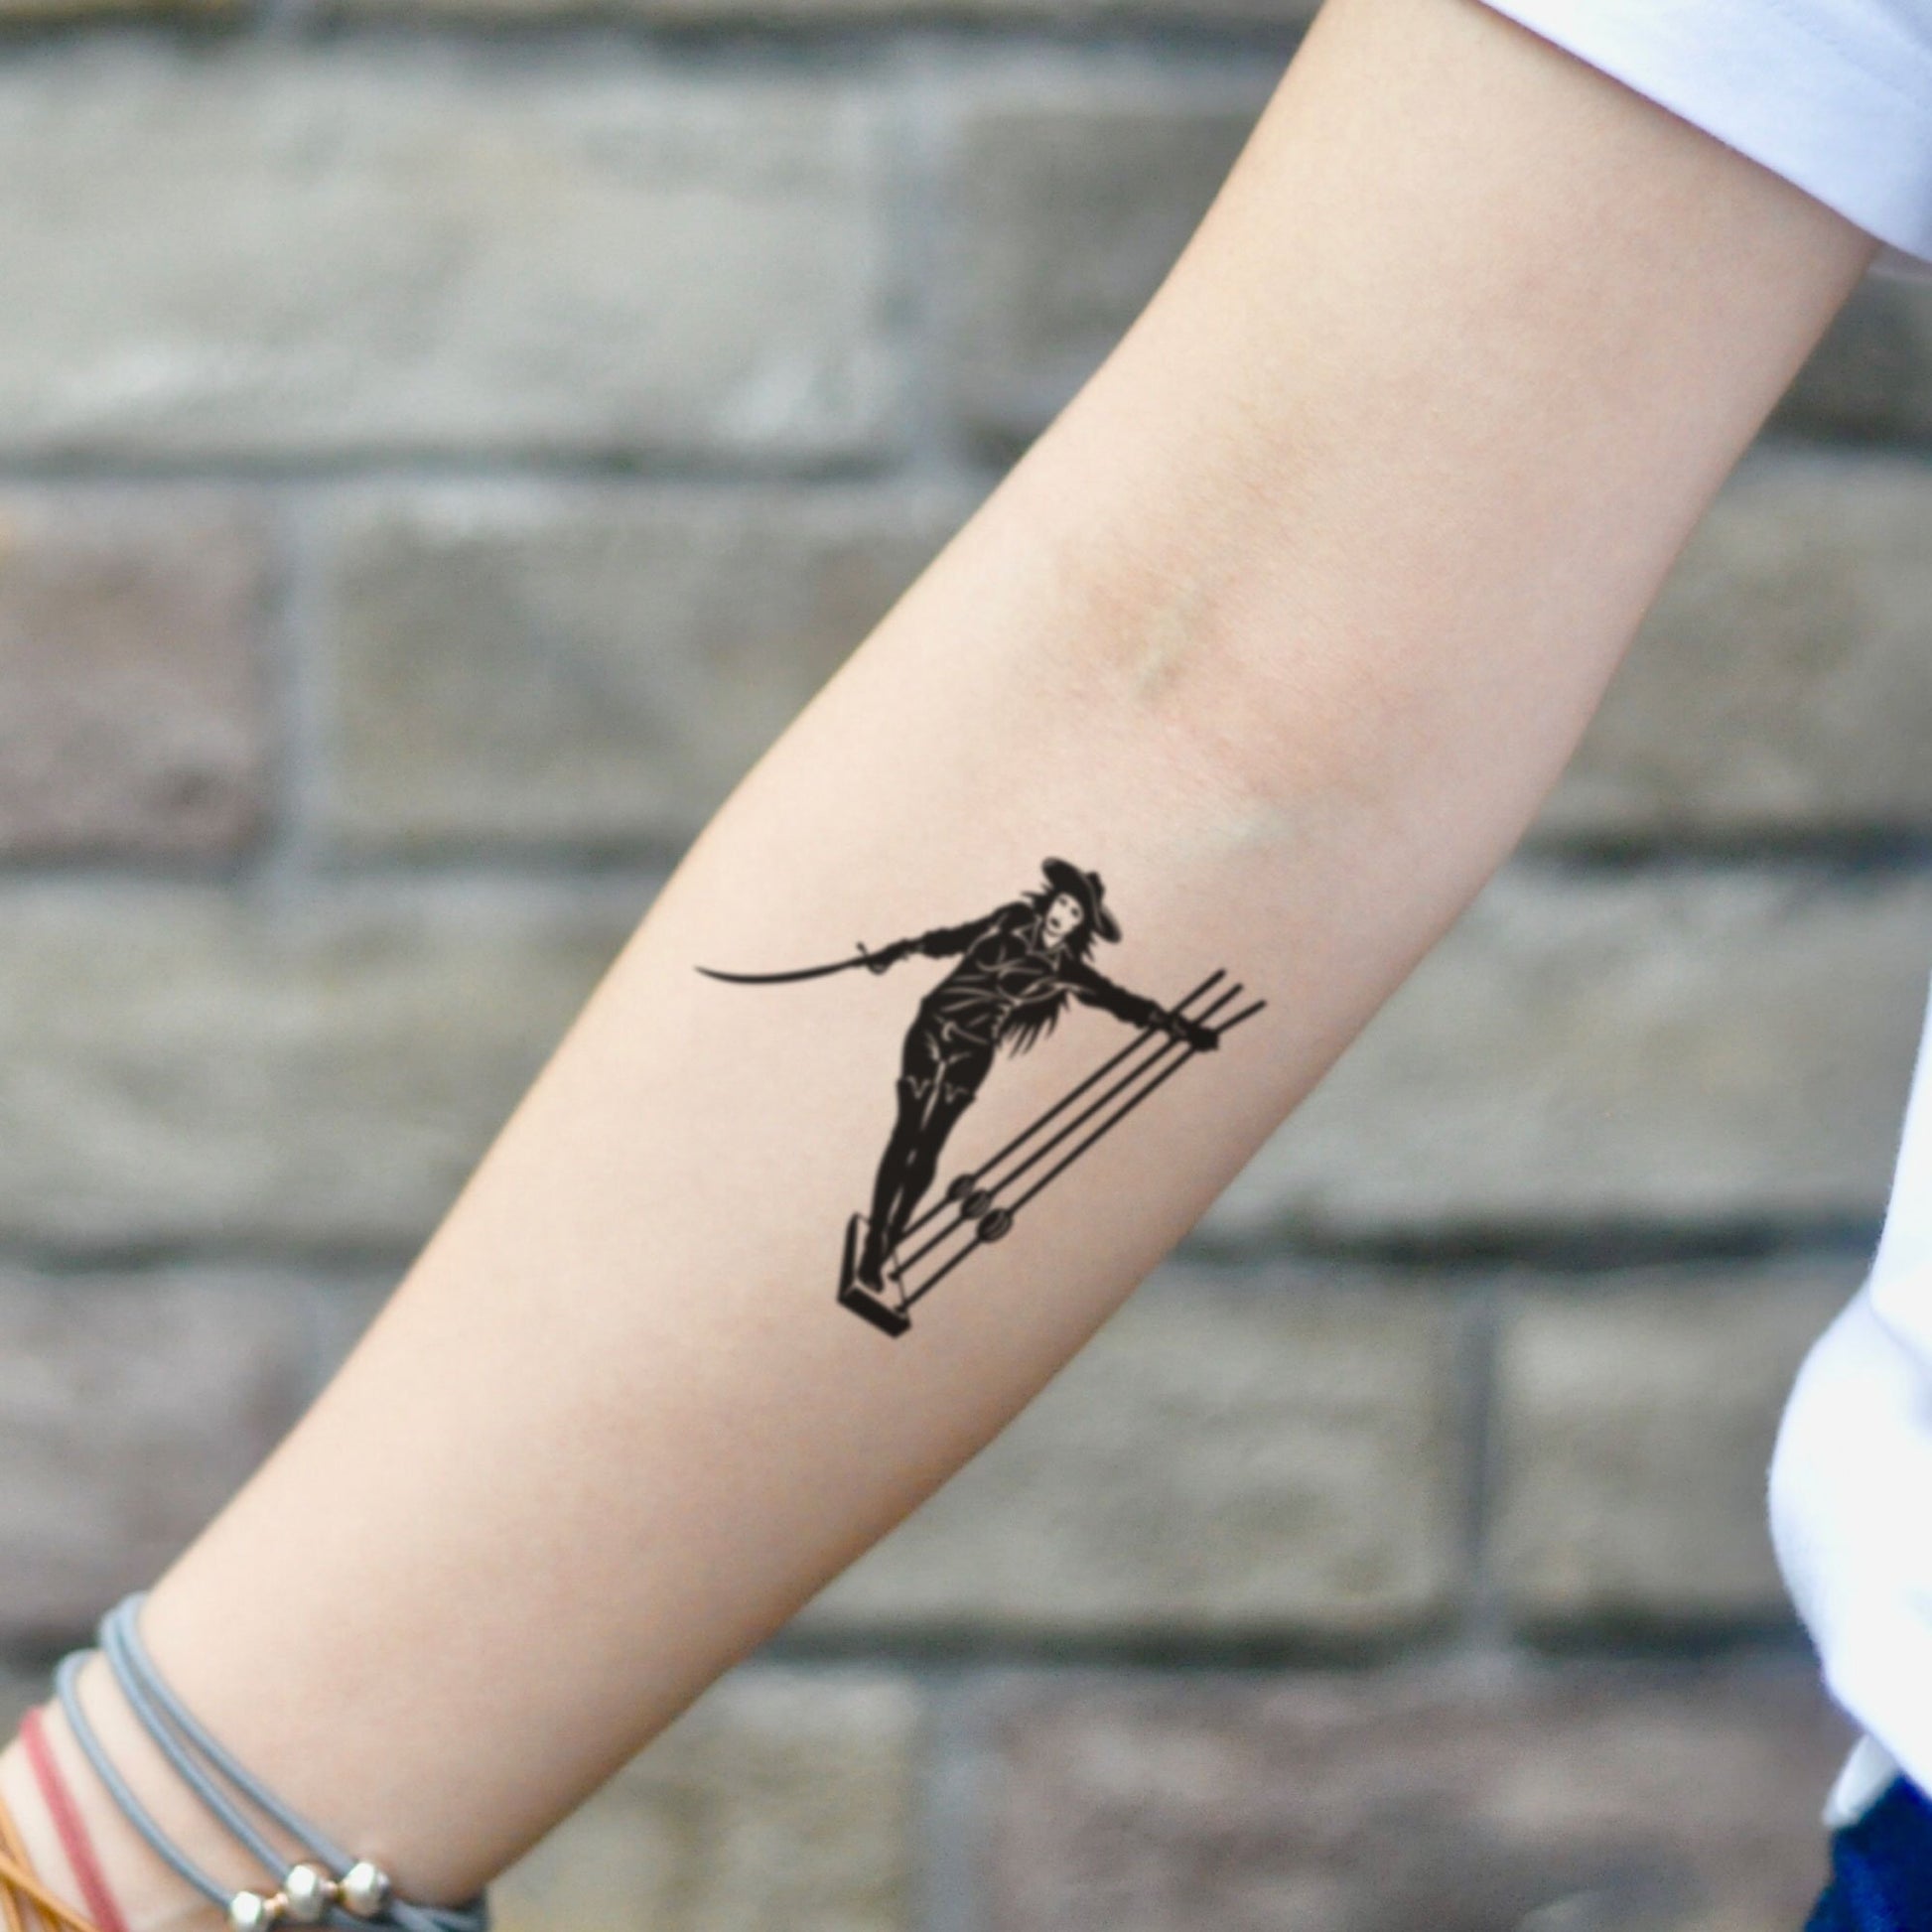 fake small female pirate illustrative temporary tattoo sticker design idea on inner arm